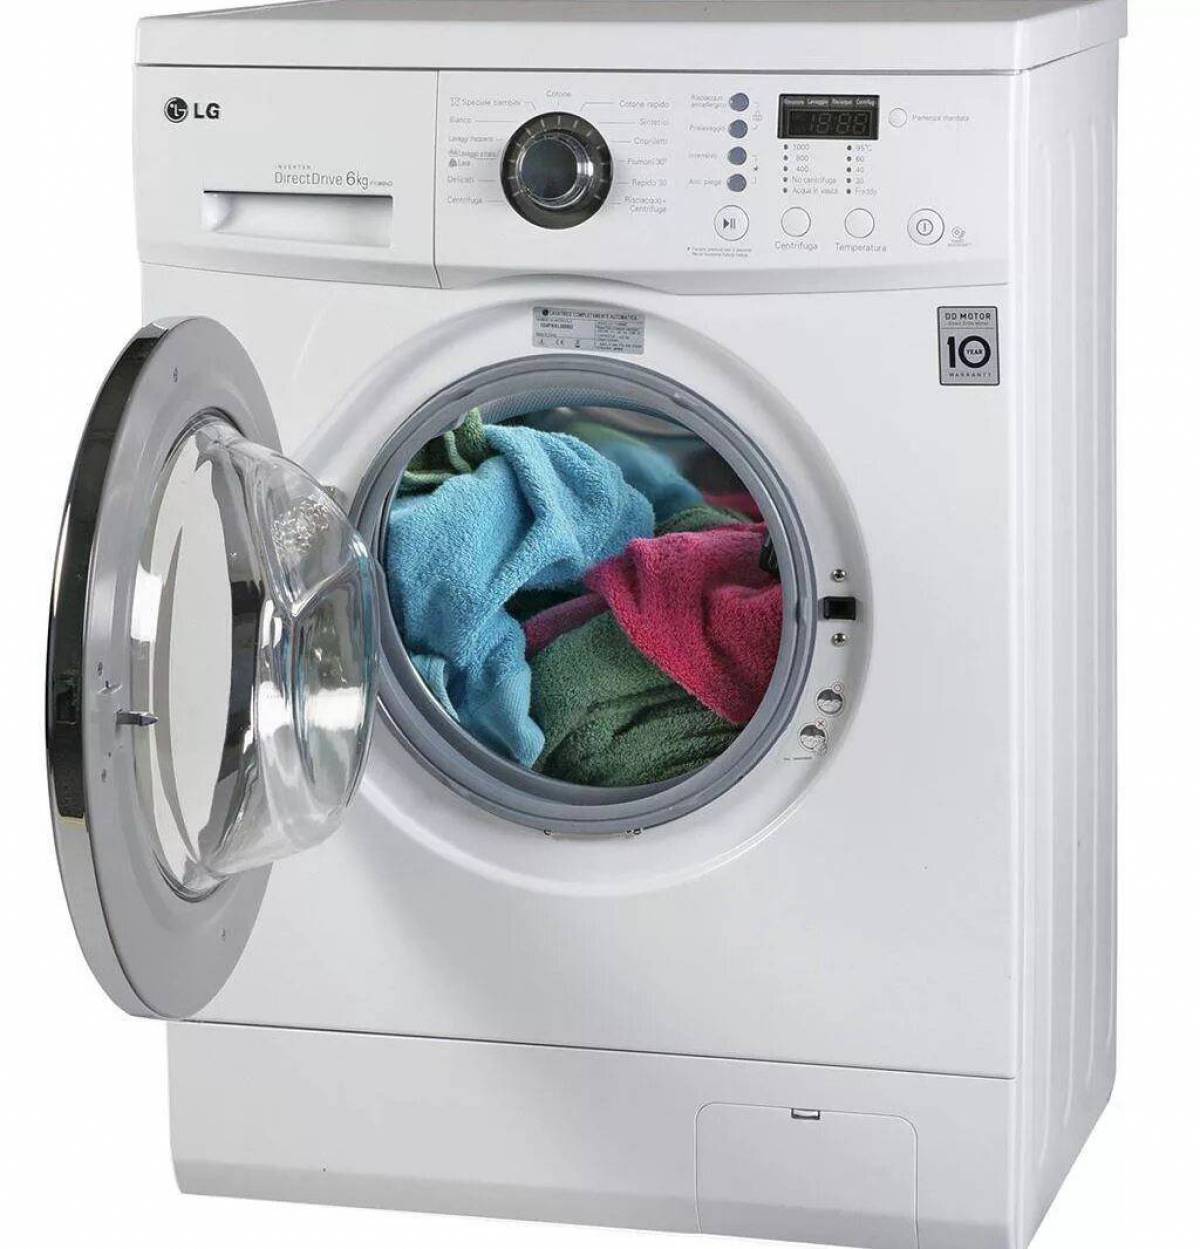 Открывается стиральная машинка lg. LG 1089nd стиральная машина. Стиральная машинка LG f10b8nd. Стиральная машина LG washing Machine. Стиральная машина LG F-1089nd.